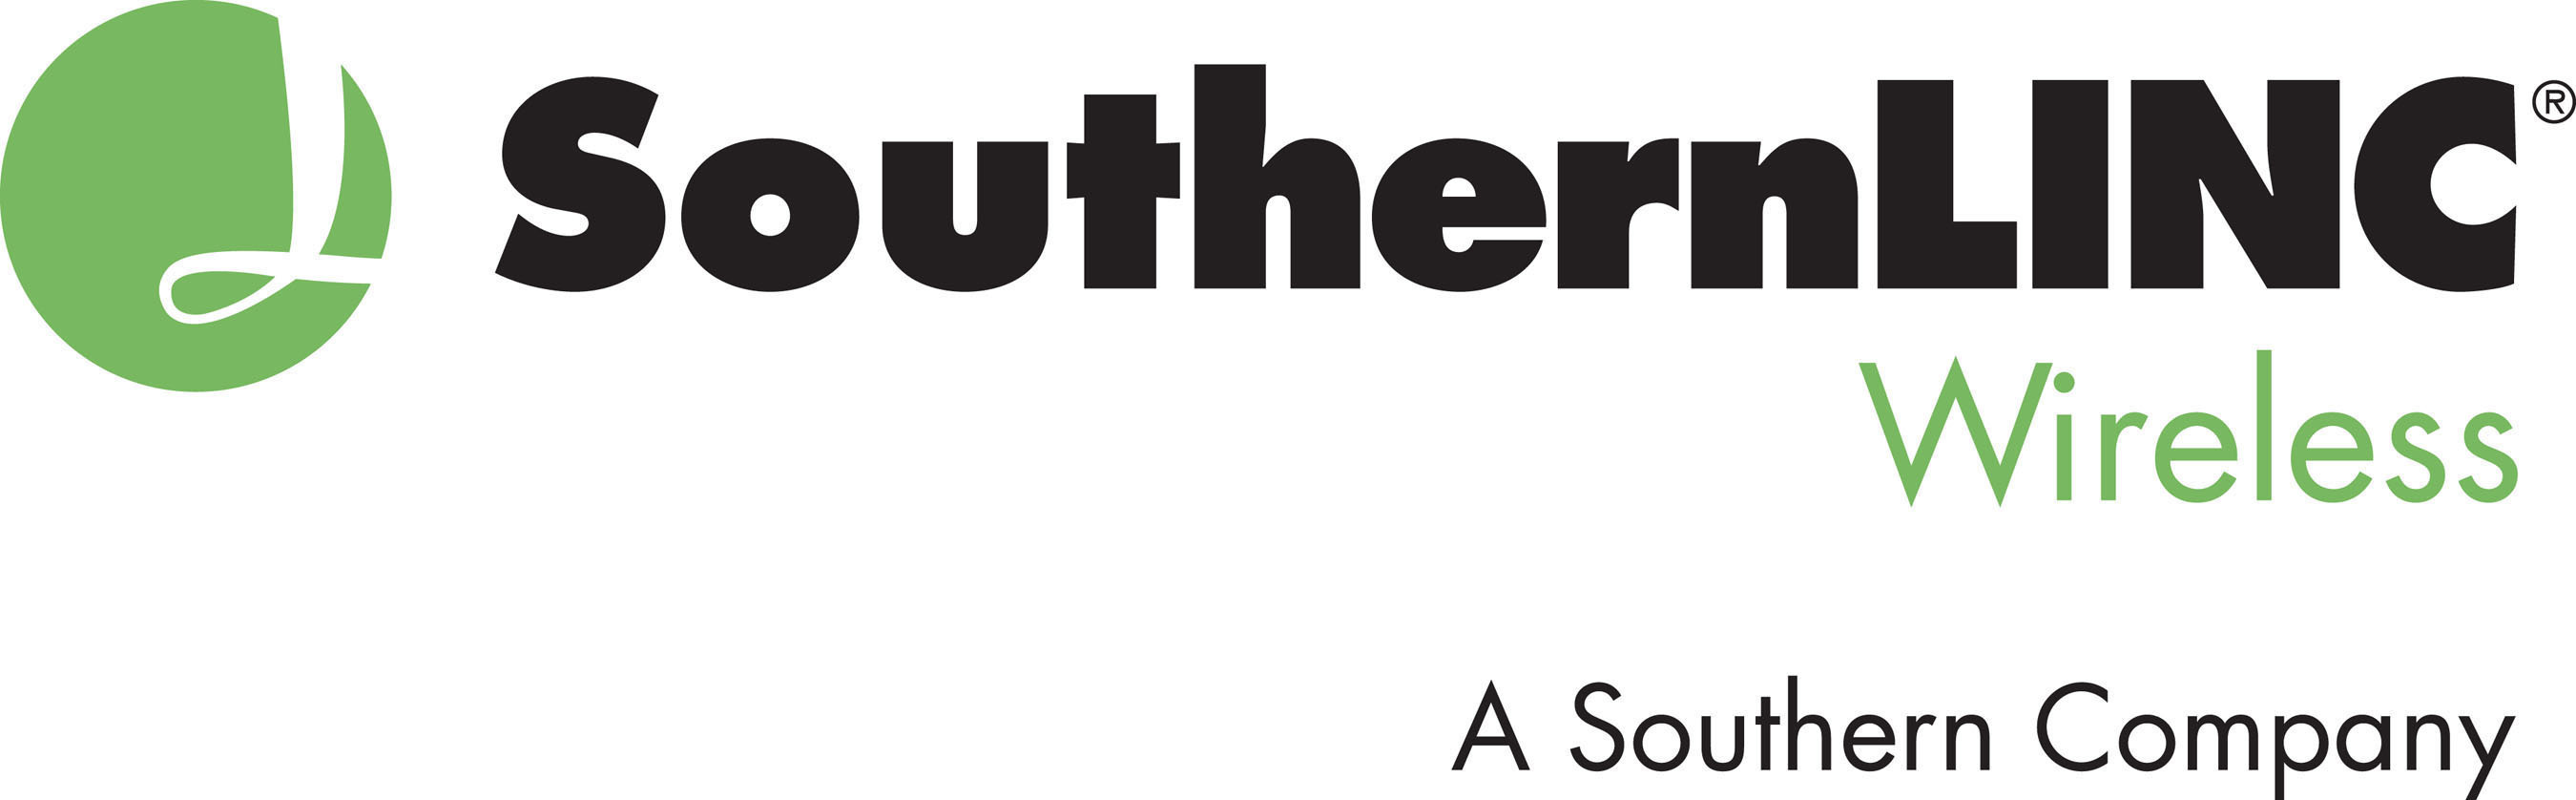 SouthernLINC Wireless logo.